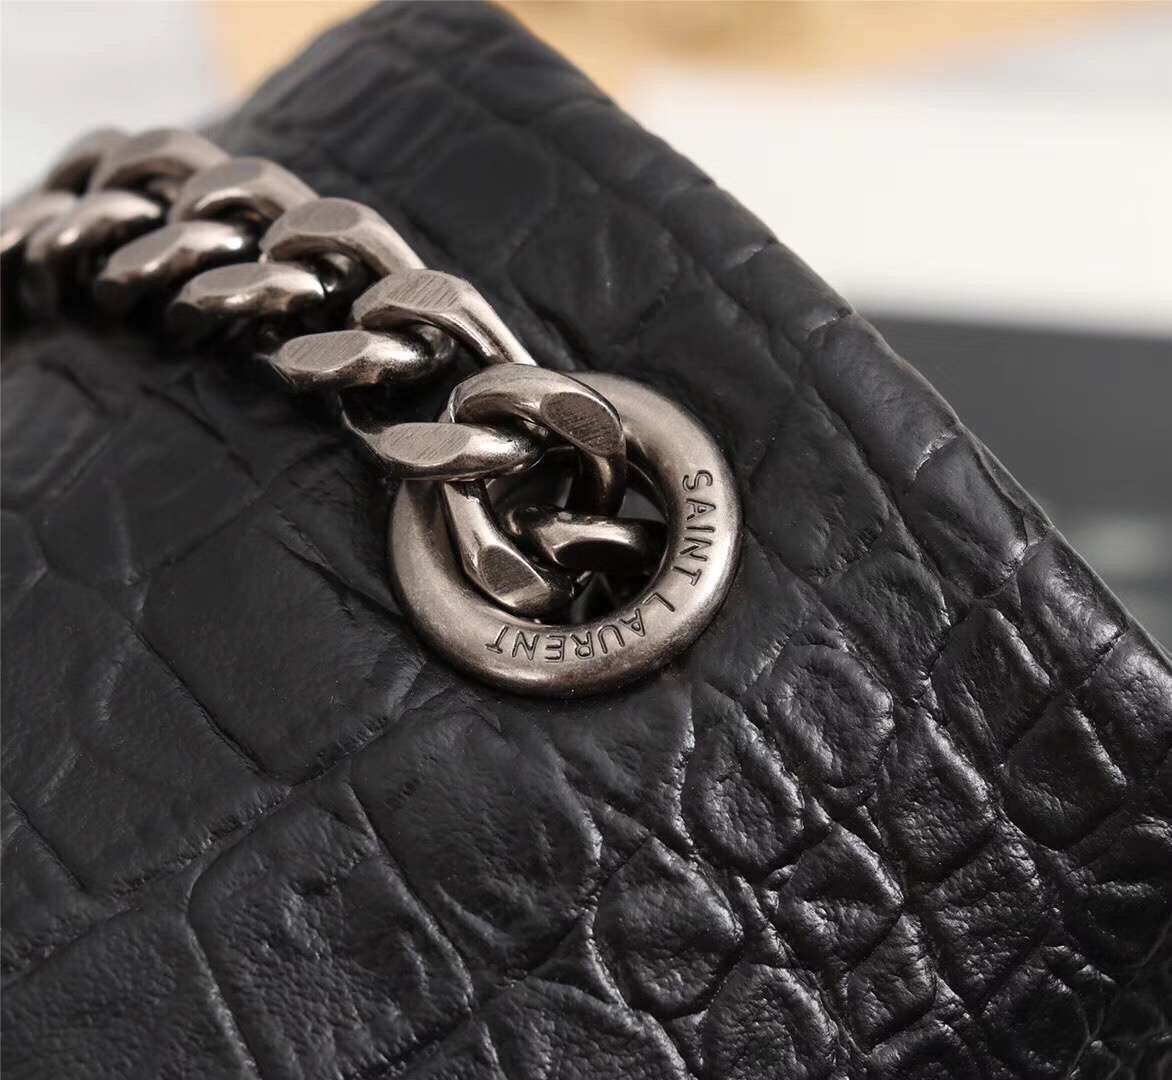 Yves Saint Laurent Calfskin Leather Tote Bag 464679 black